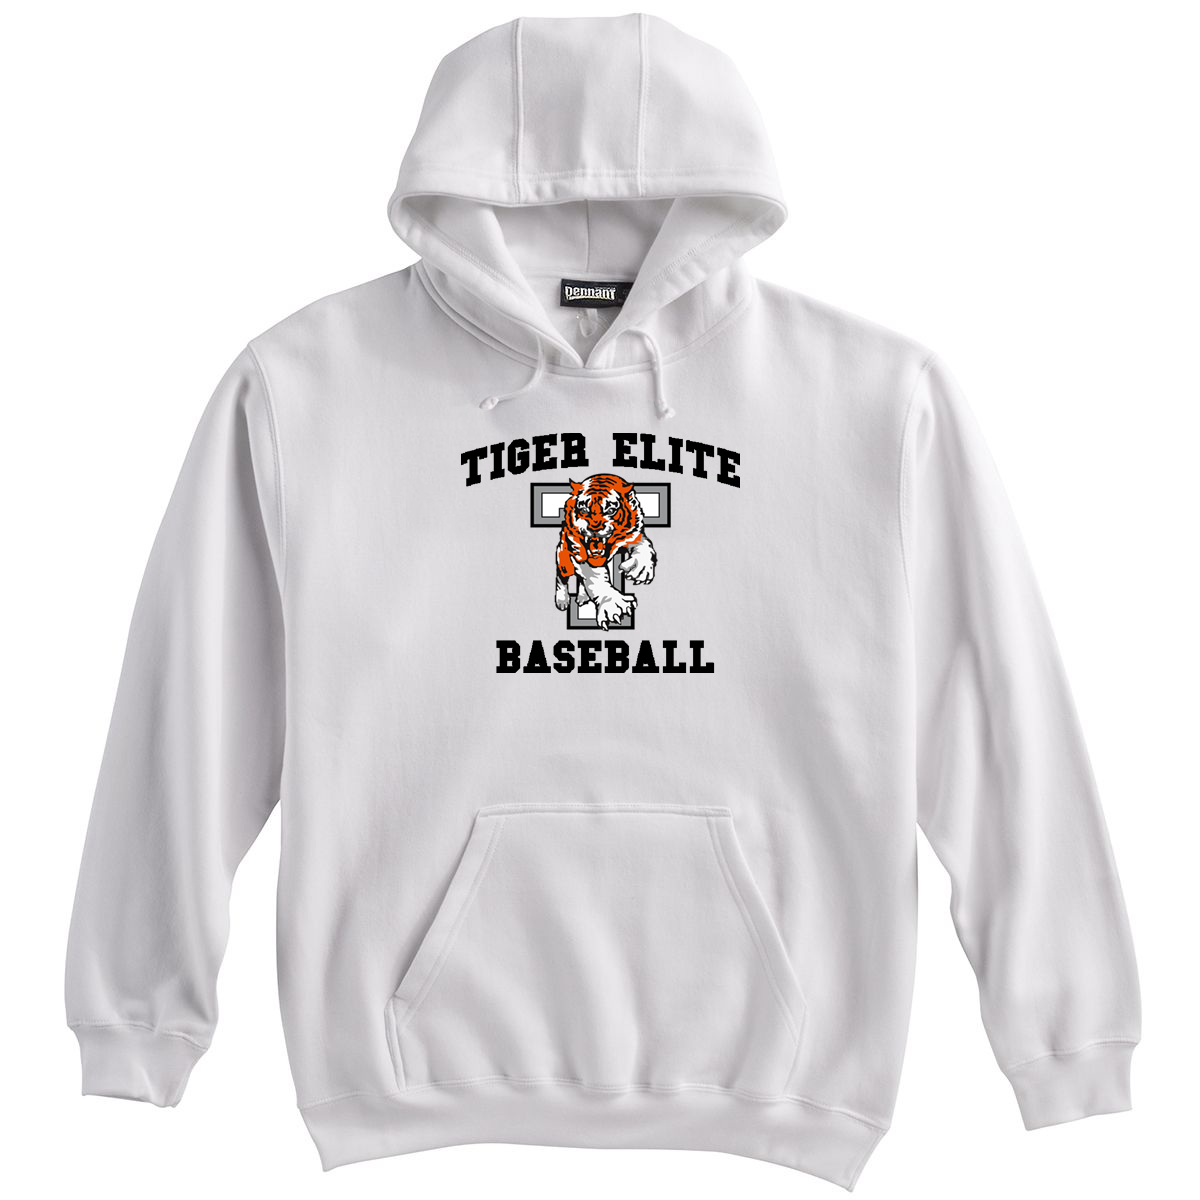 Tiger Elite Baseball Sweatshirt